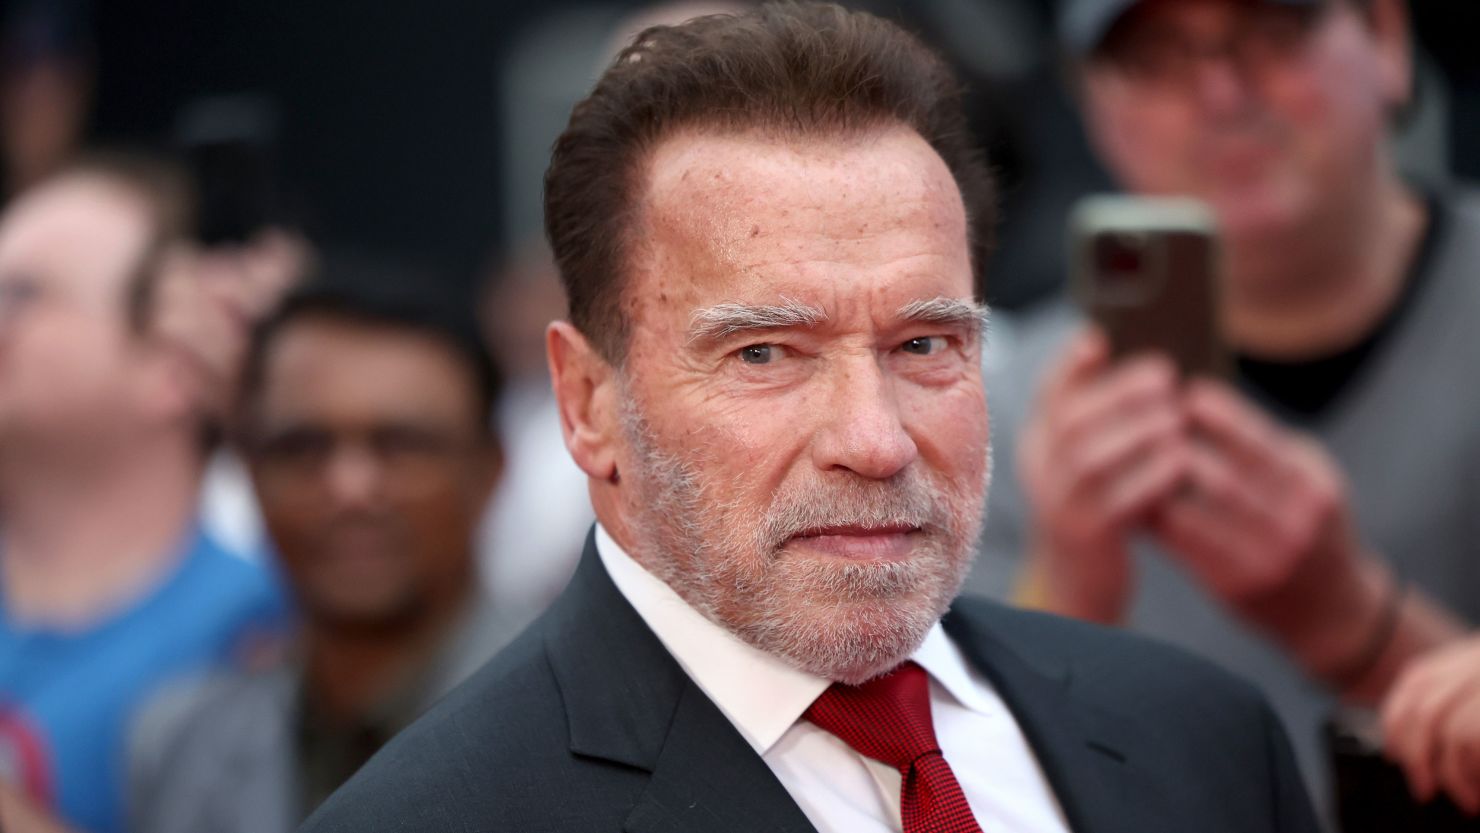 Arnold Schwarzenegger’s Airport Ordeal Over ‘Unregistered’ Watch